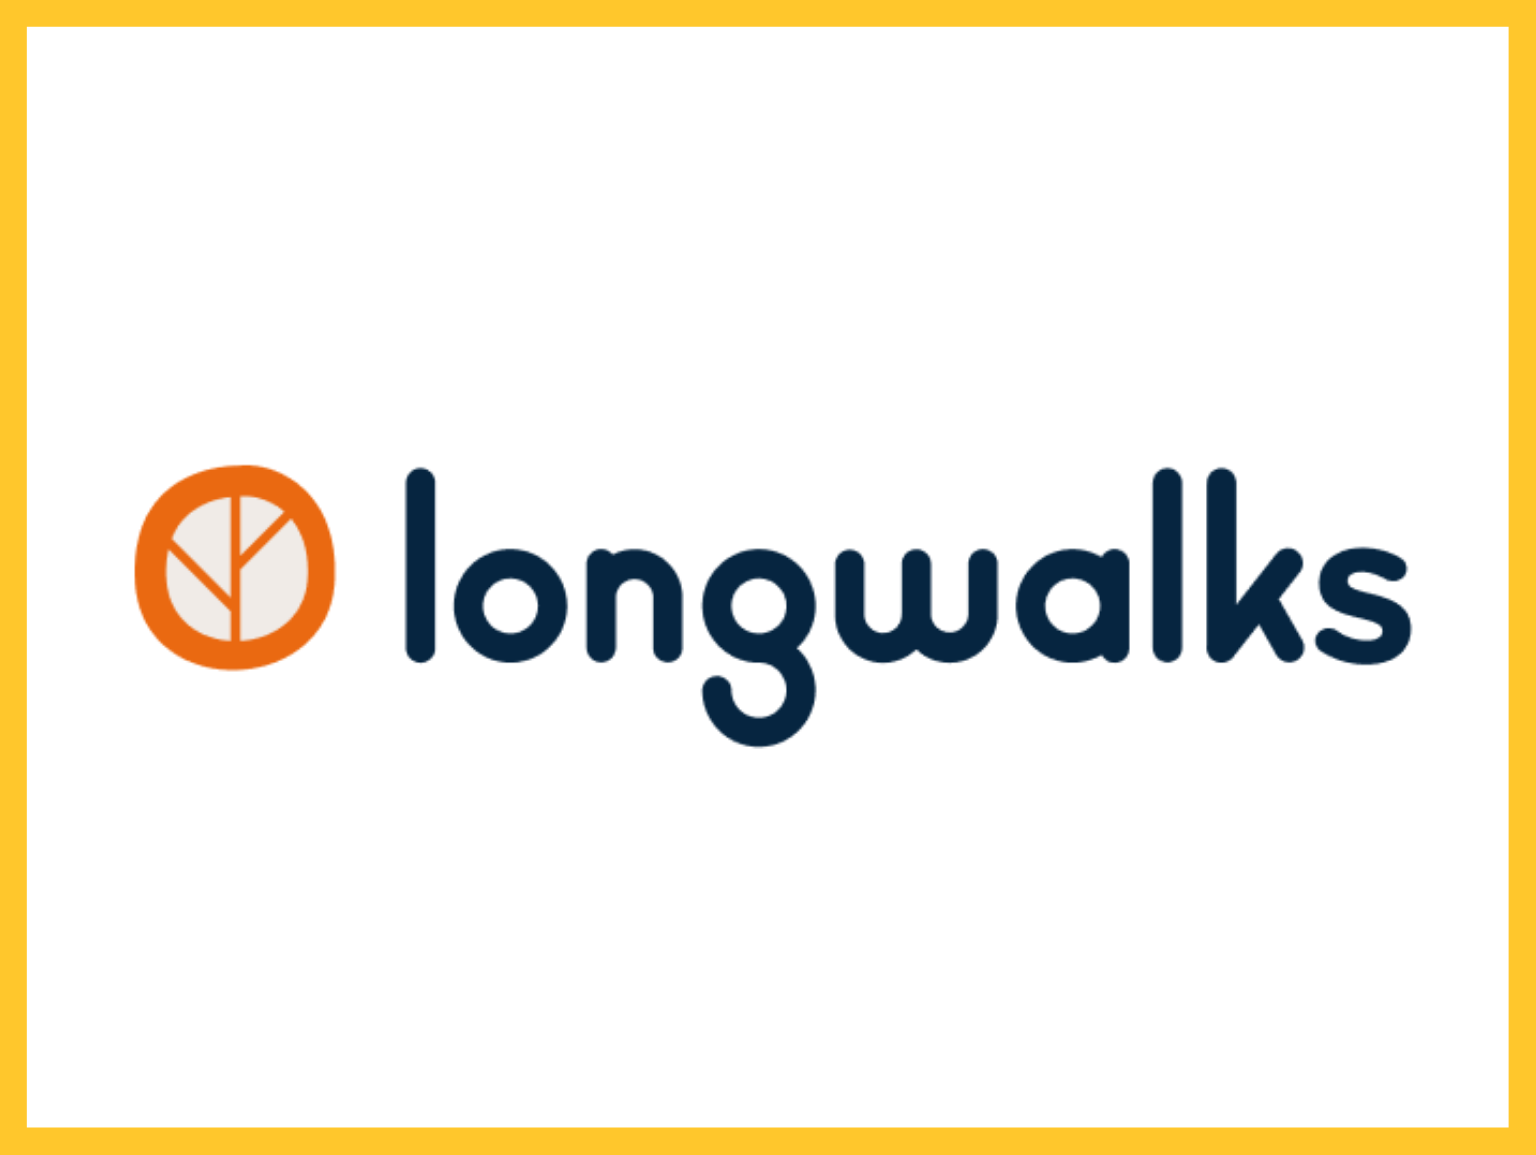 Longwalks App